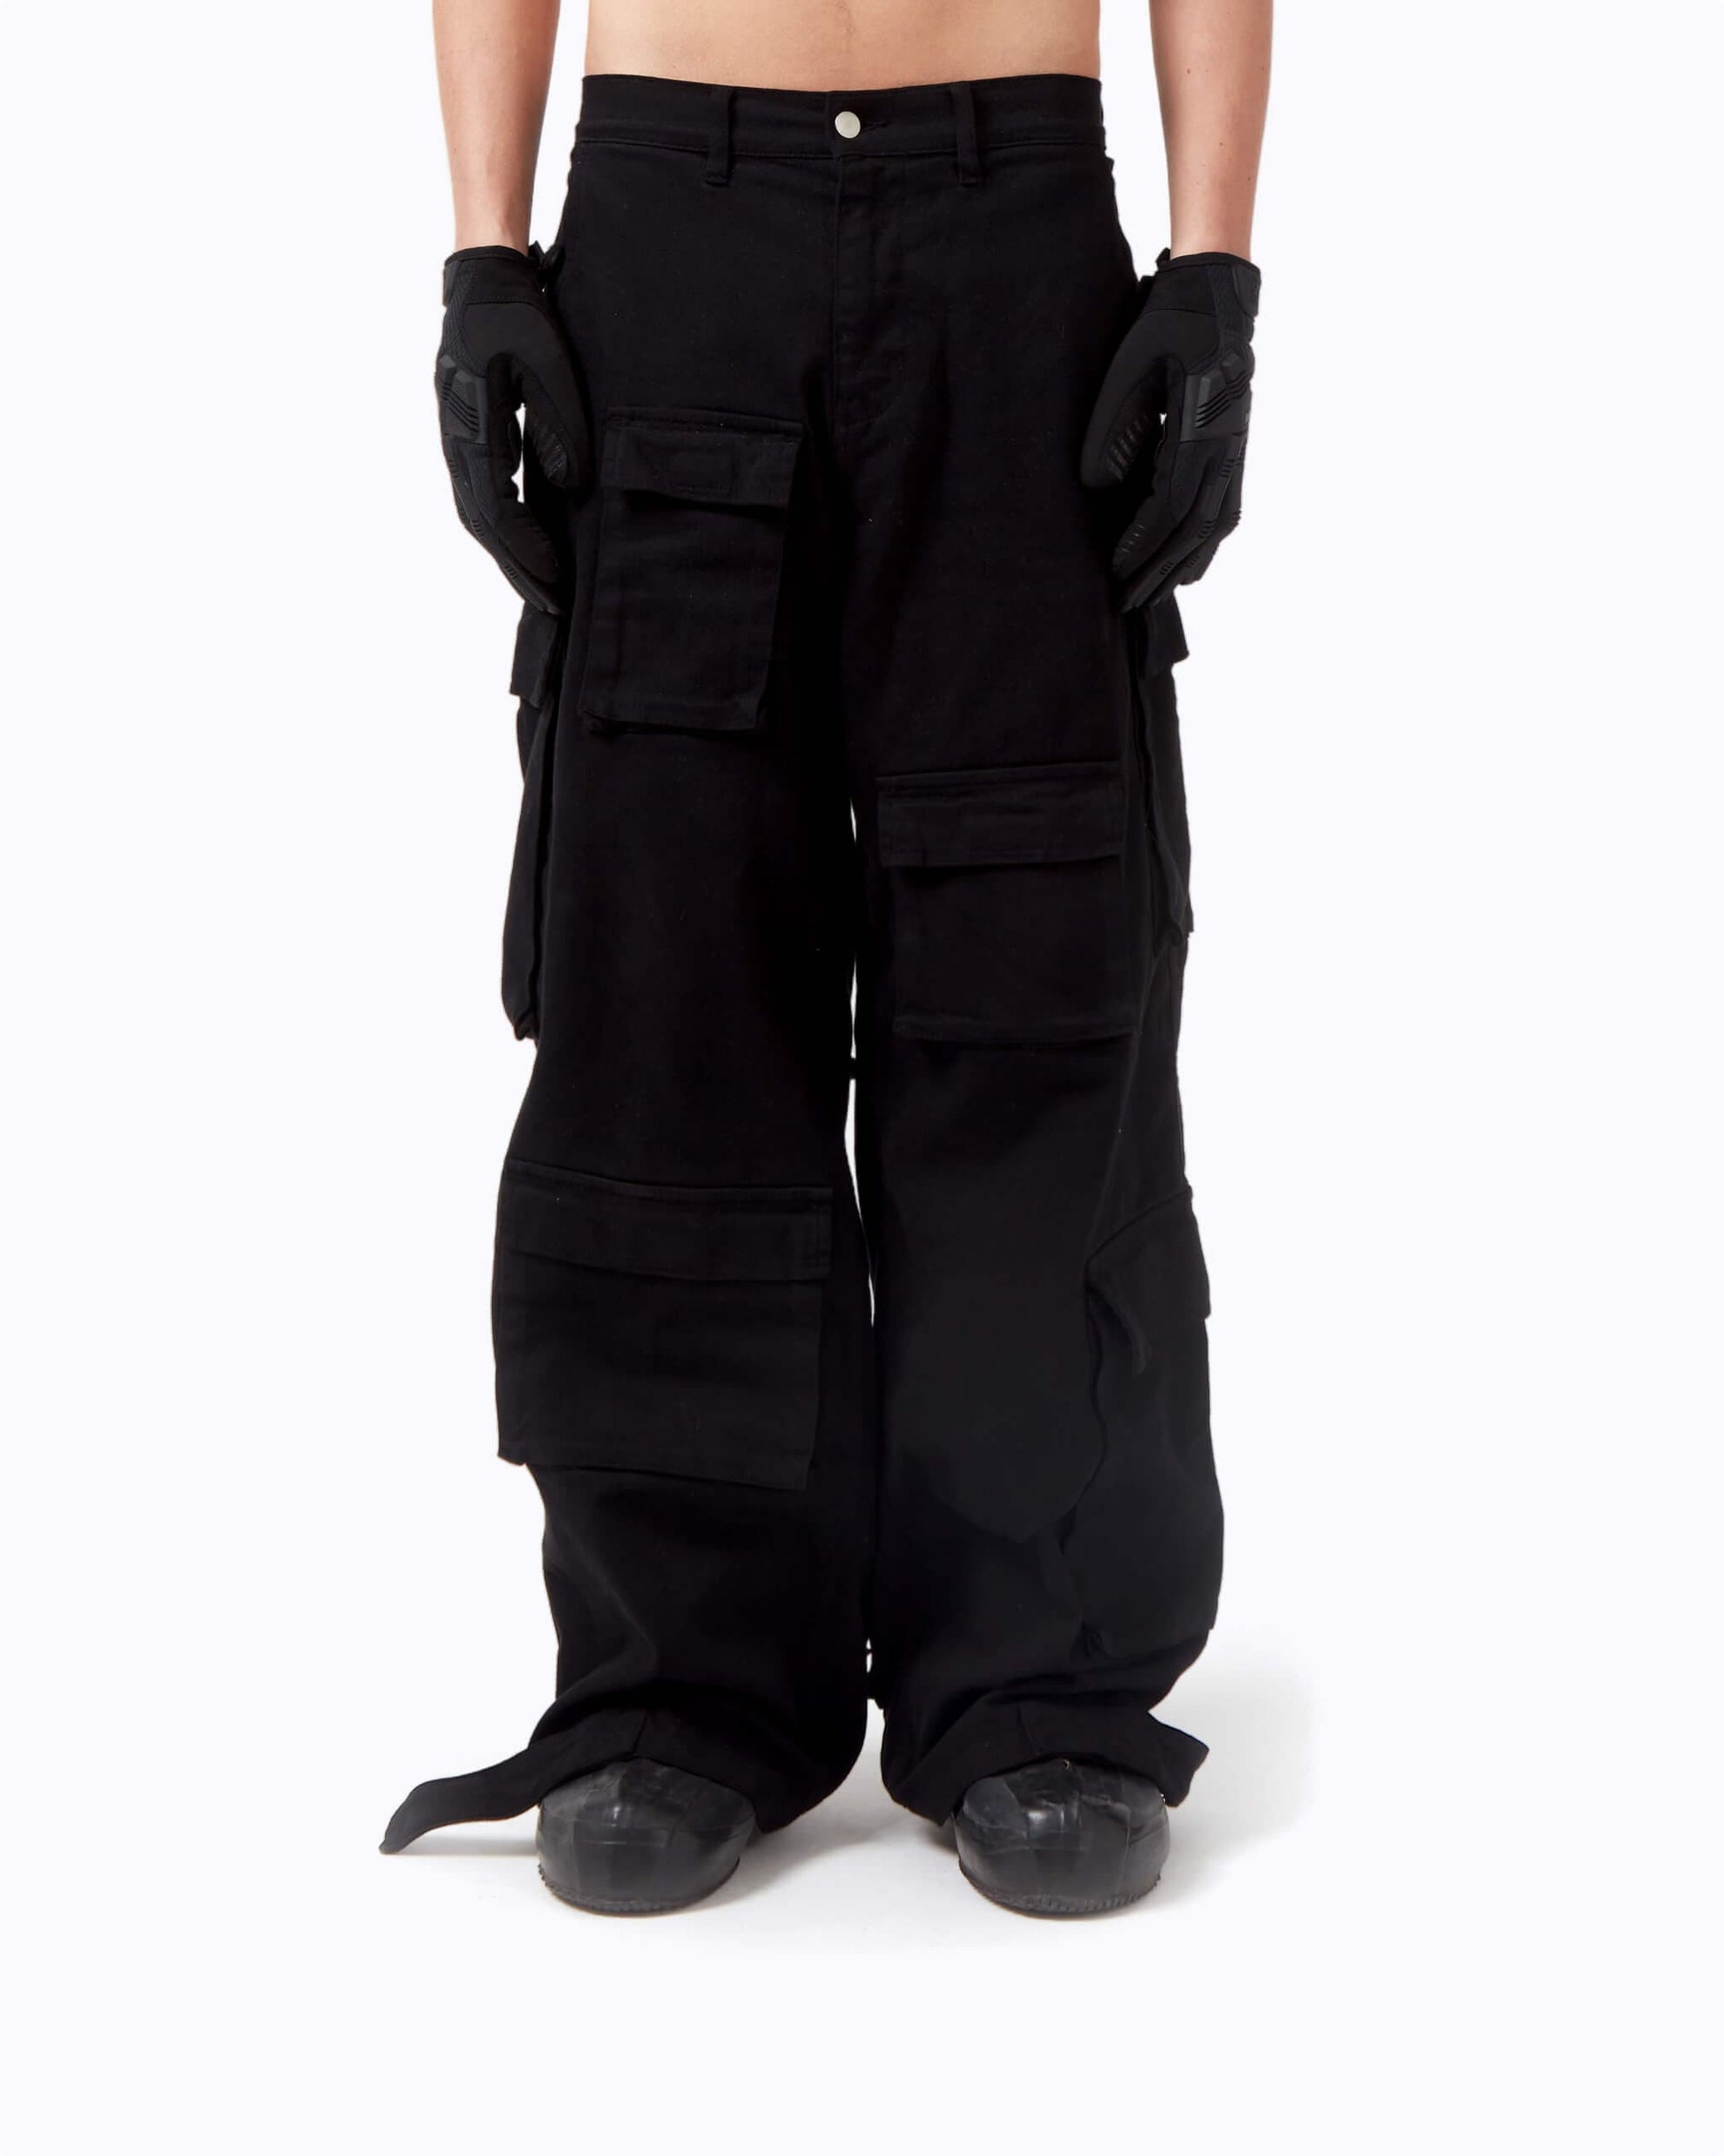 INHZOY Kids Girls Cargo Jogger Pants 4 Pockets Cotton Fashion Bottoms with  Drawstring Green 6 - Walmart.com